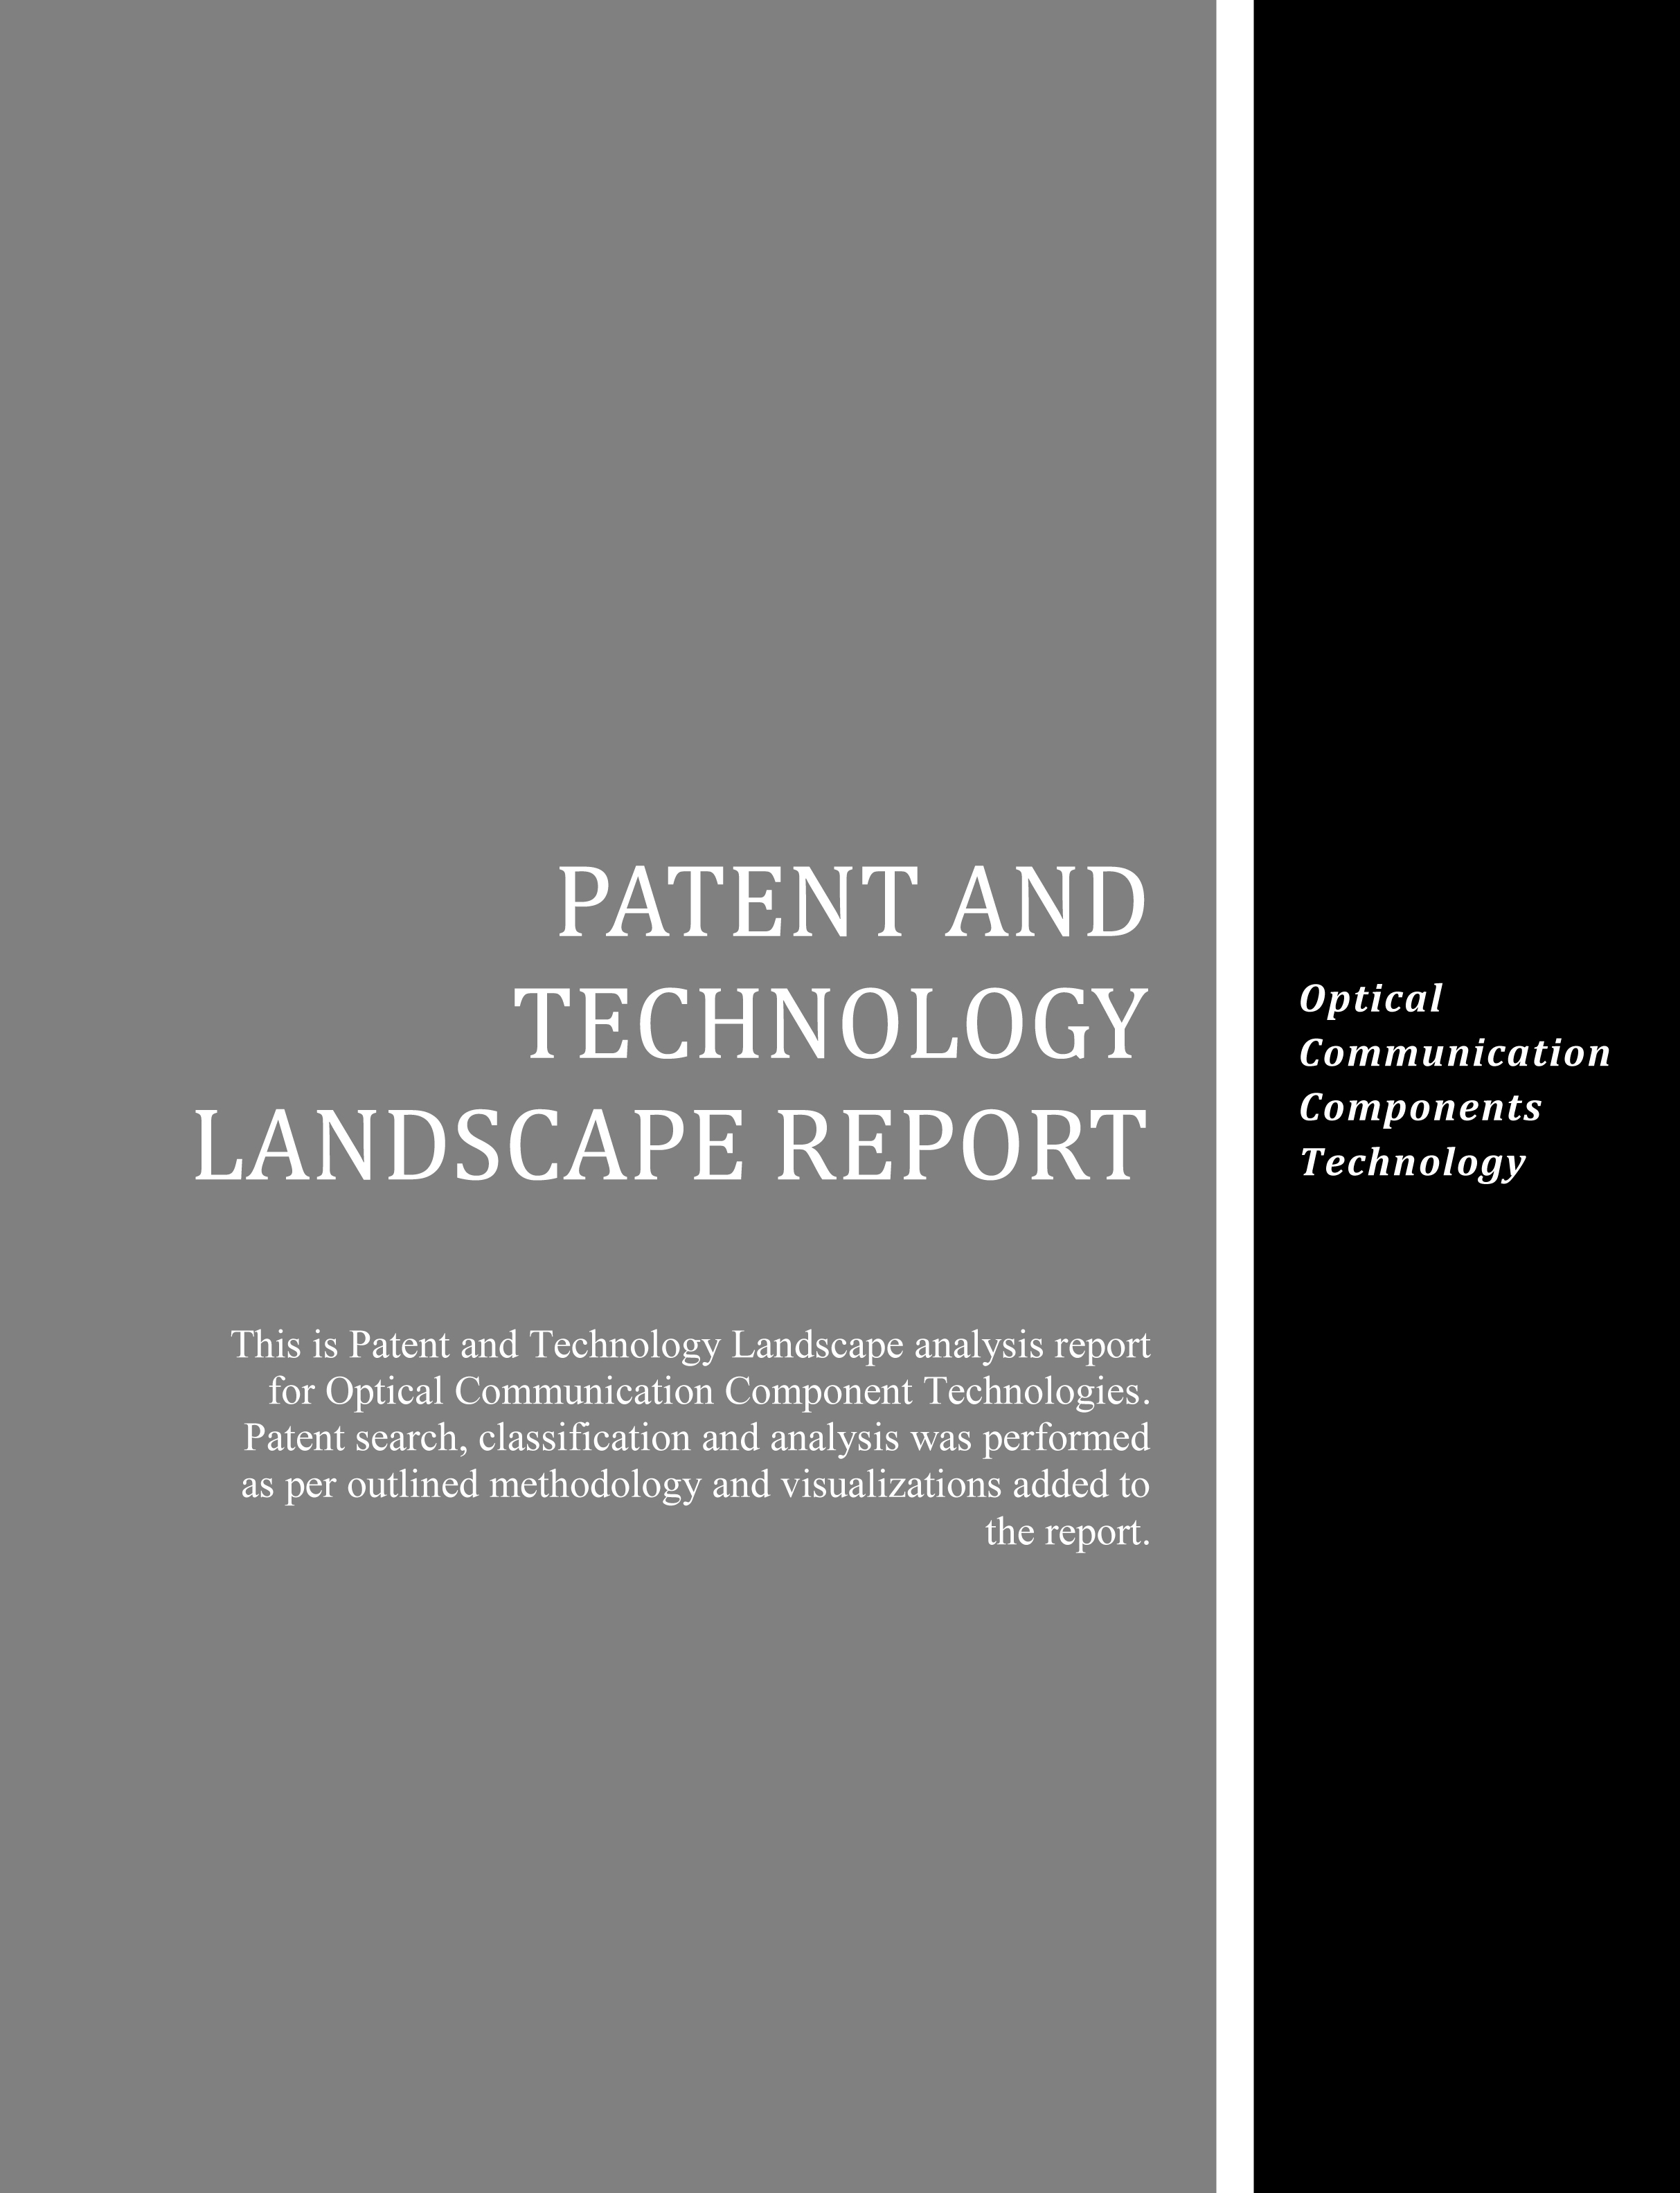 Optical Communication Components Technology Landscape Report